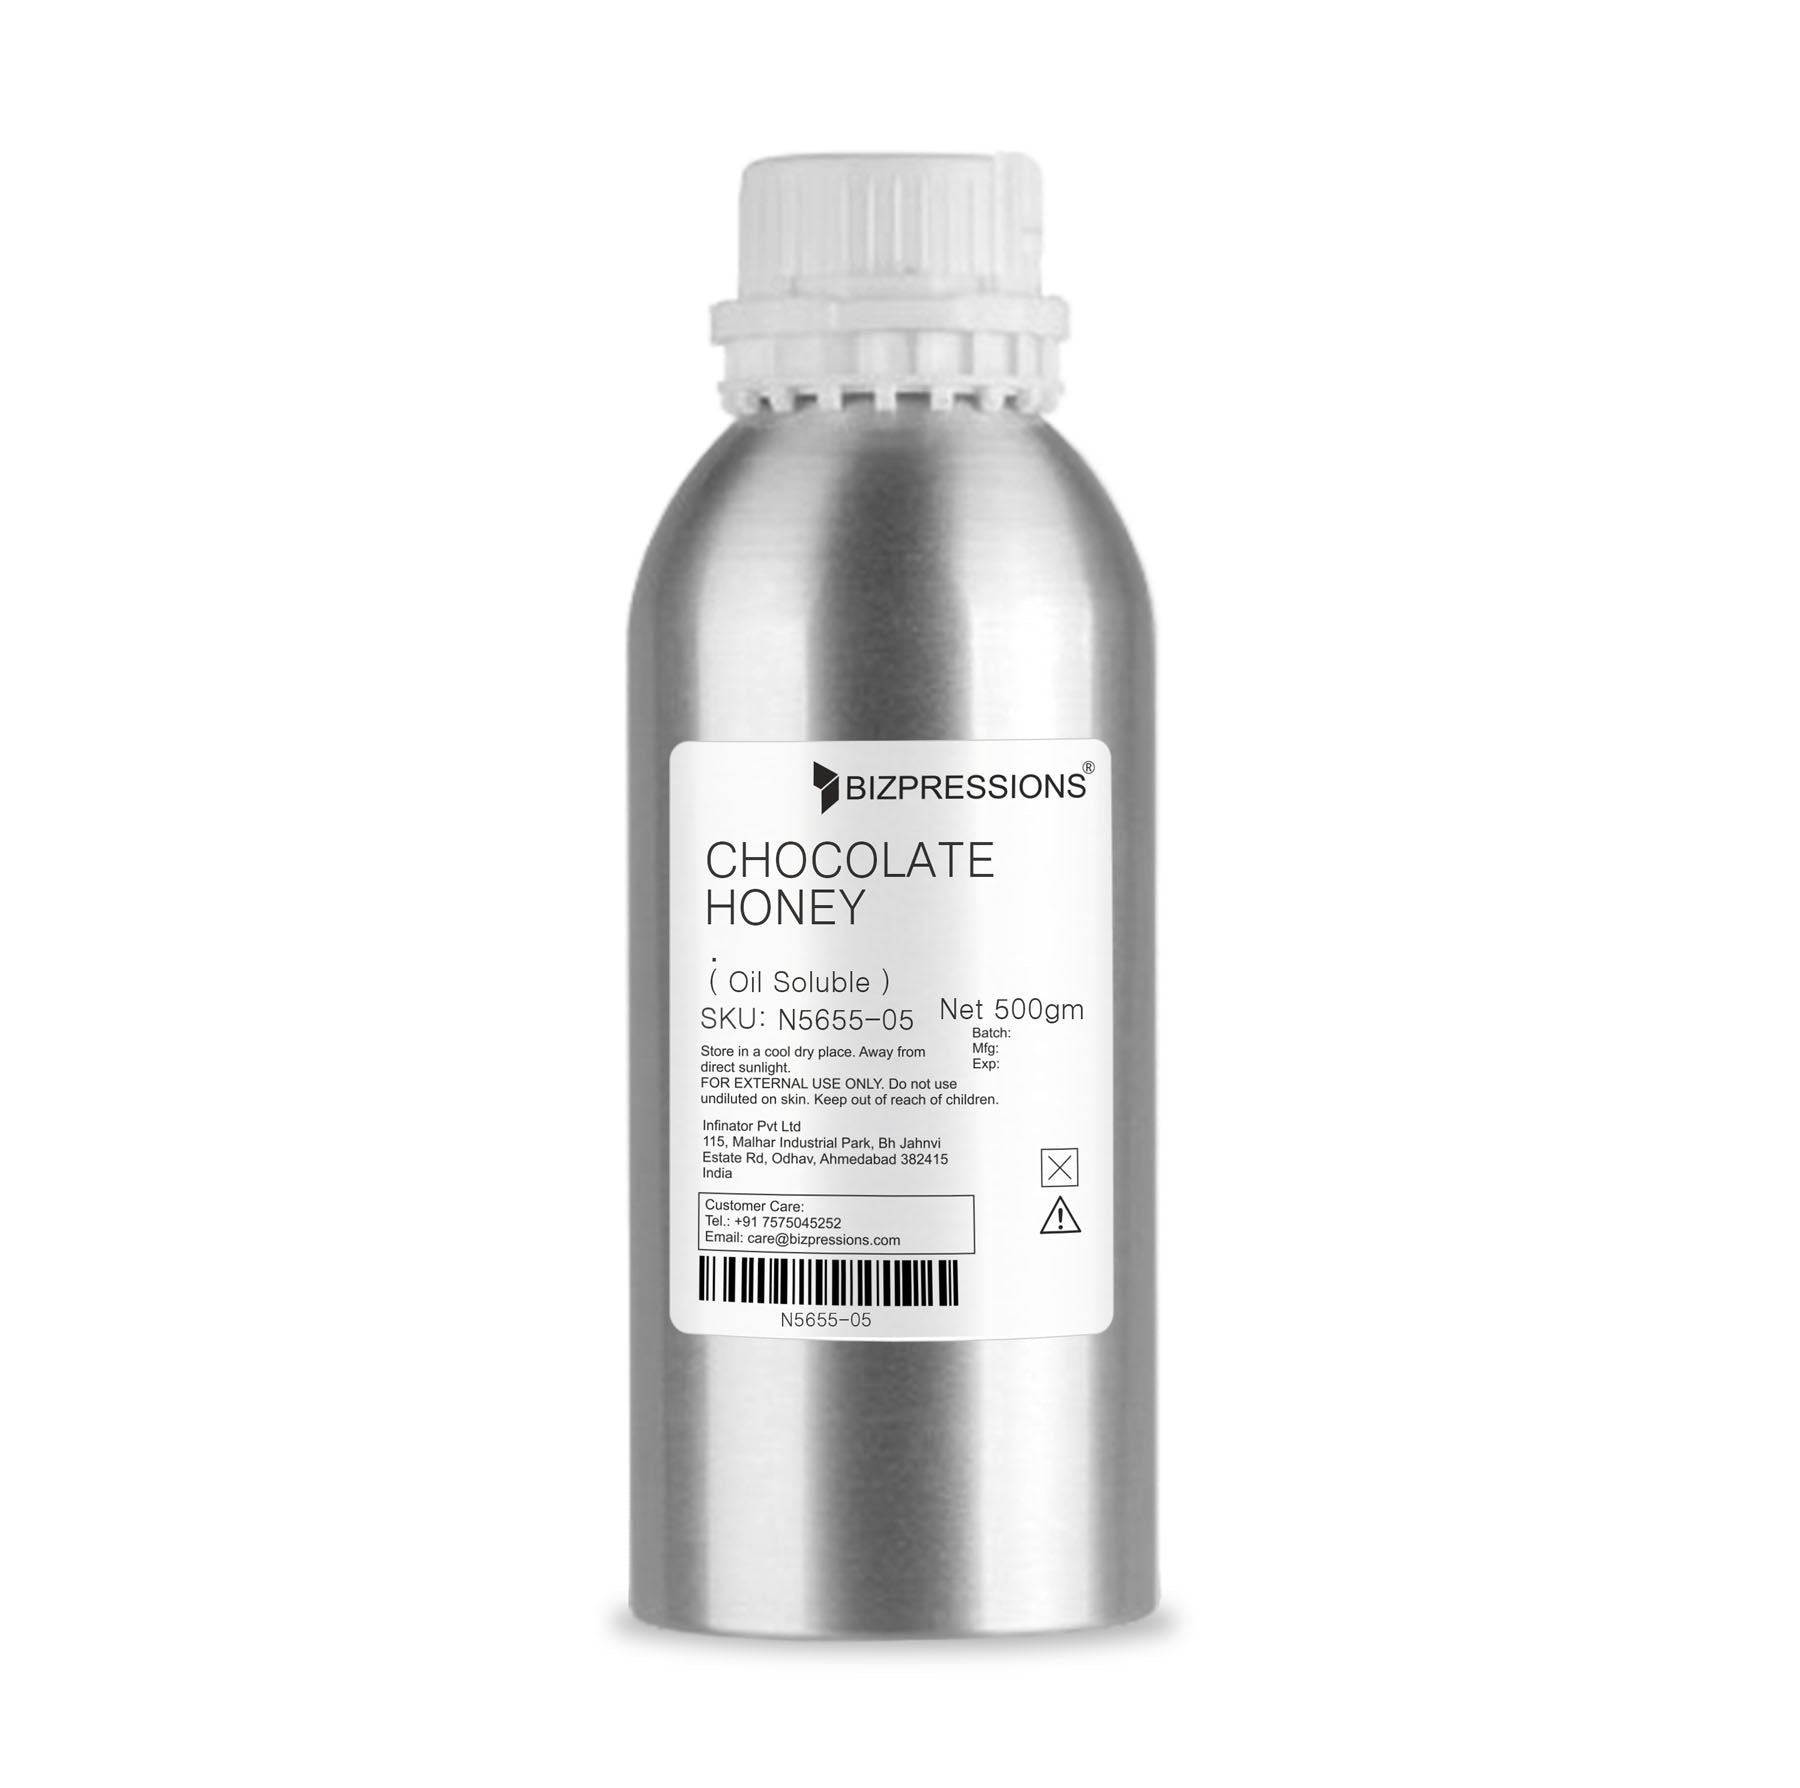 CHOCOLATE HONEY - Fragrance ( Oil Soluble ) - 500 gm